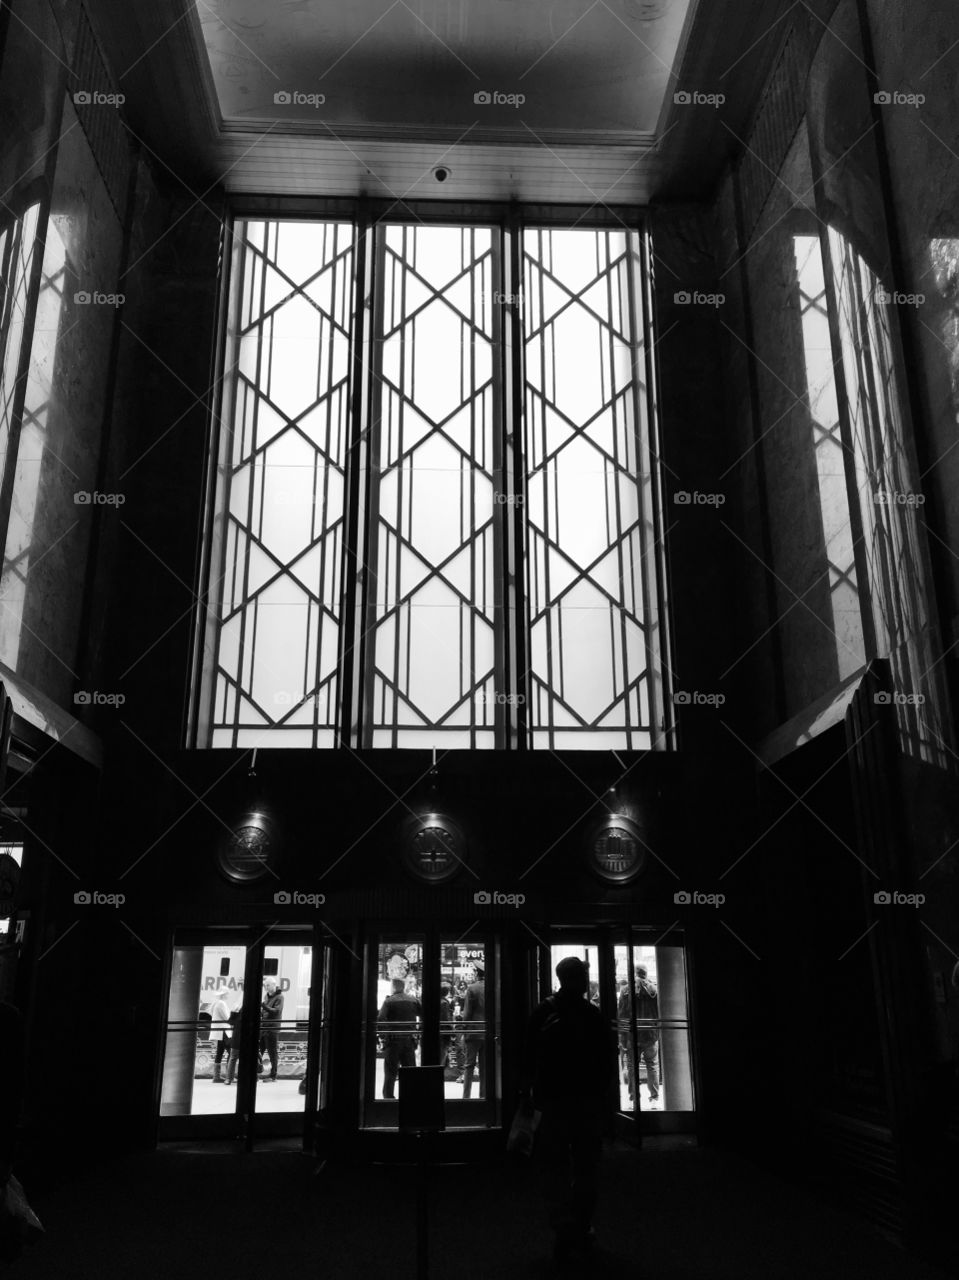 Art Deco windows in the city